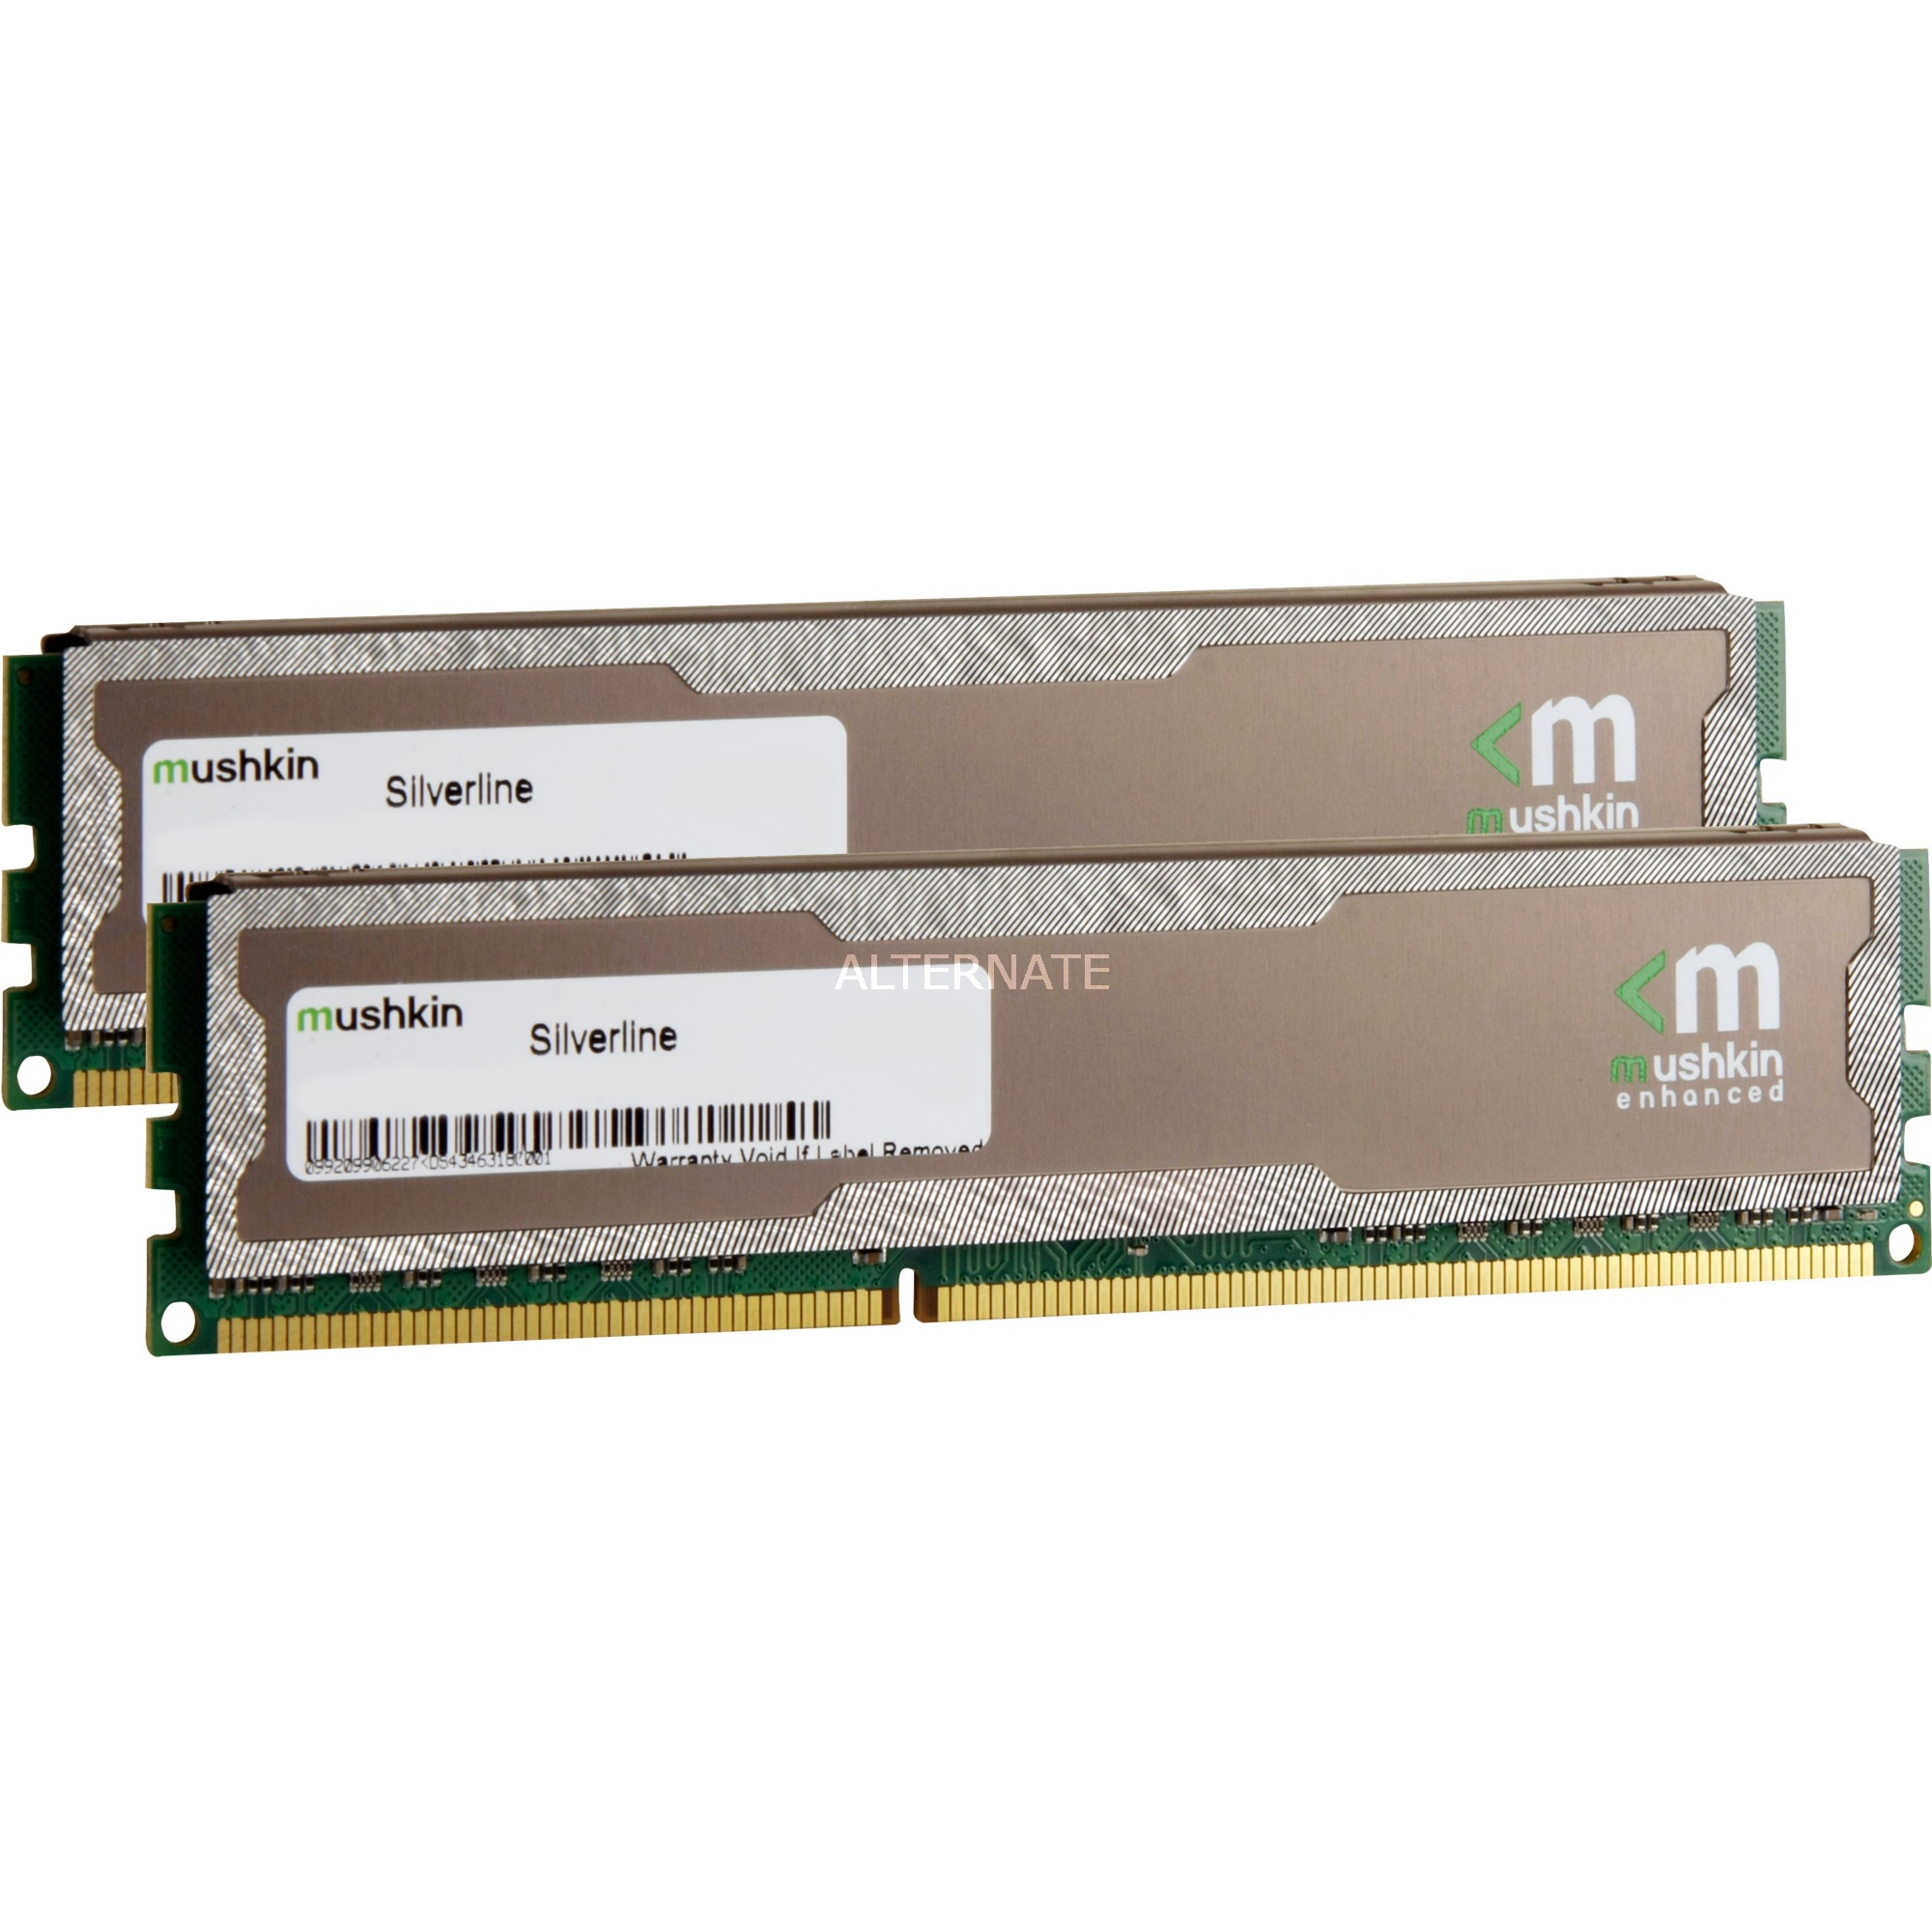 Mushkin PC3-10666 Arbeitsspeicher 8GB (1333 MHz, 240-polig) DDR3-RAM Kit